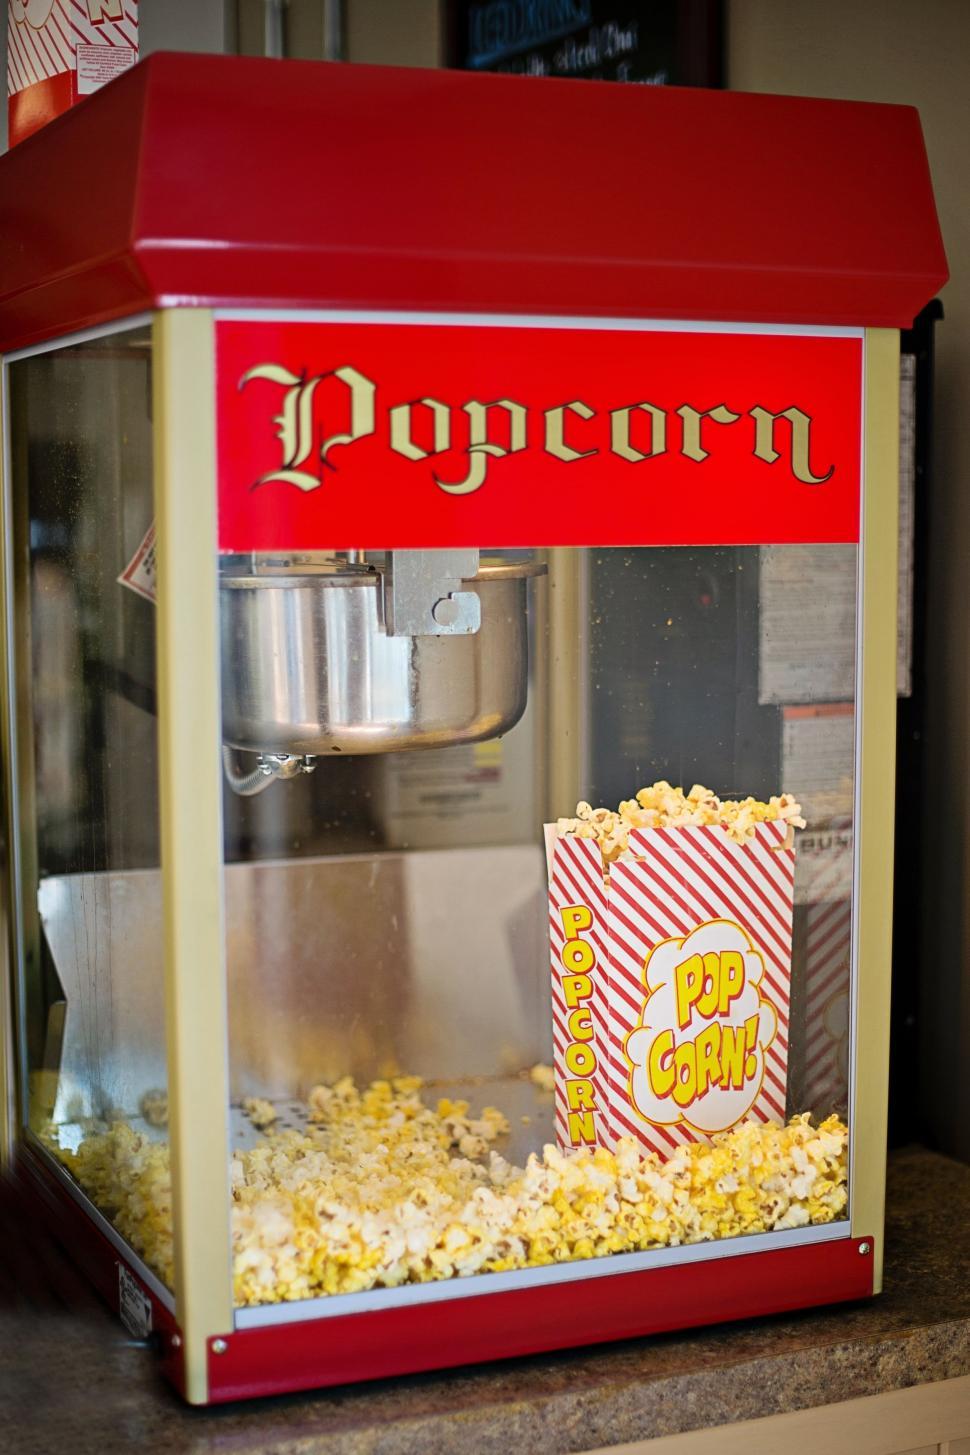 Free Image of Popcorn machine 